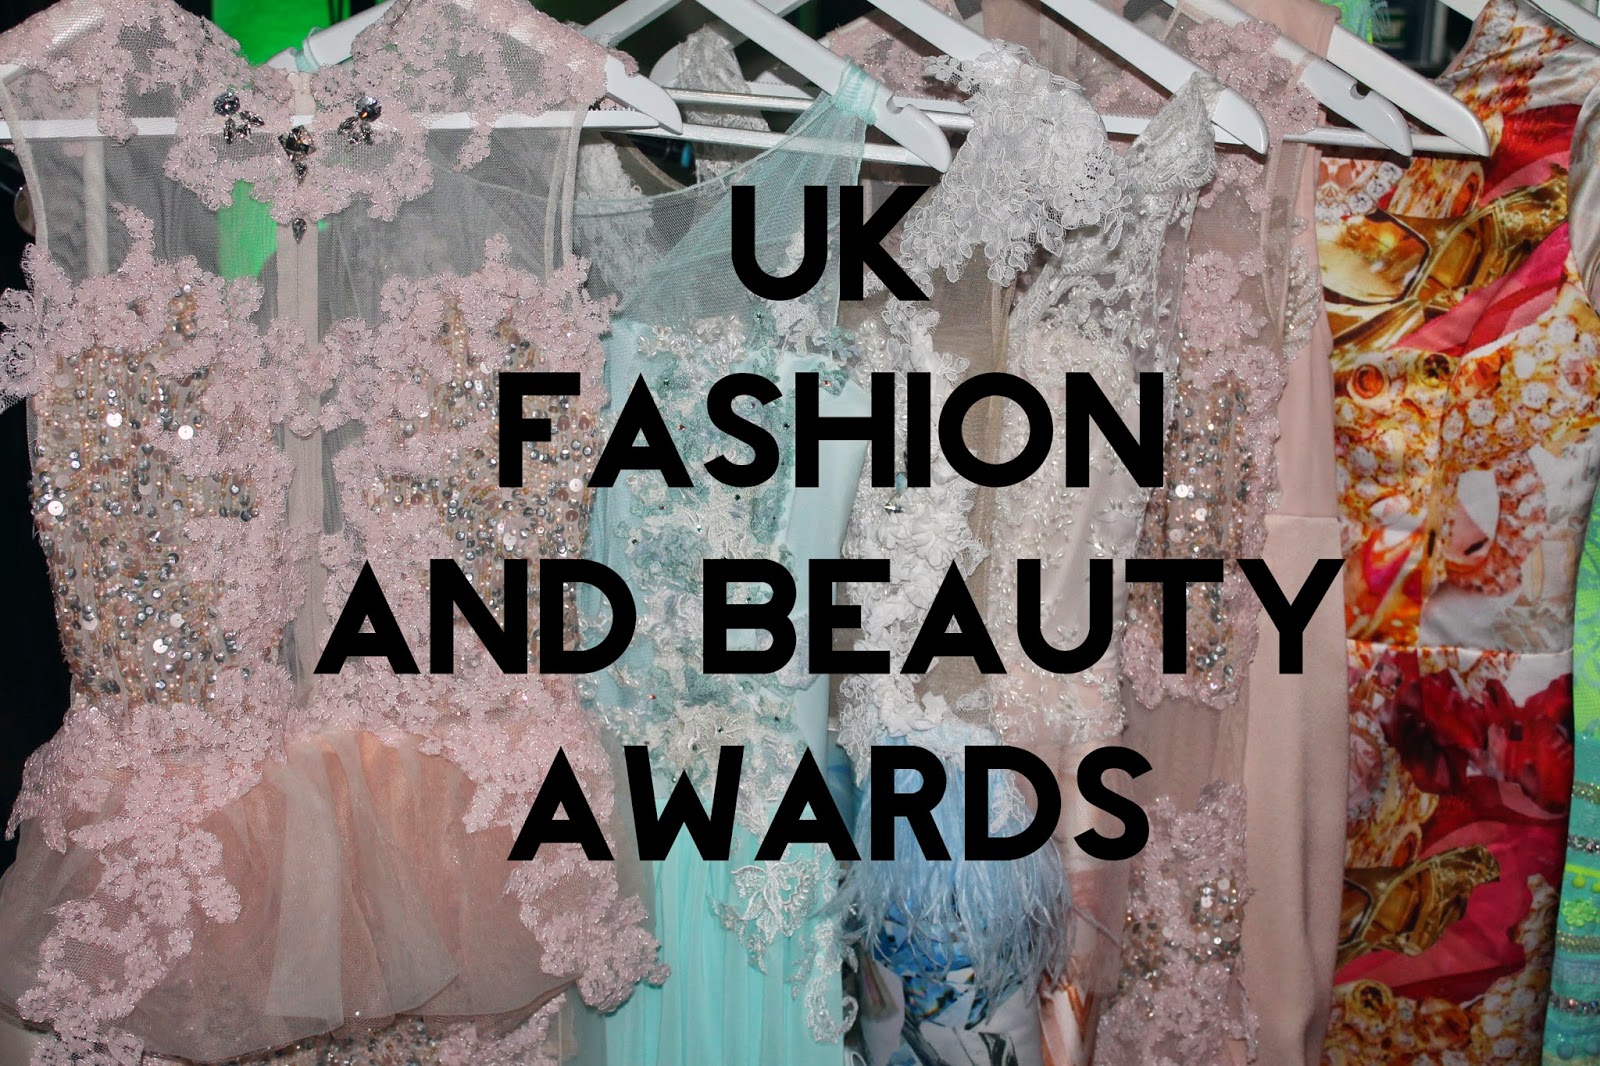 UK fashion and beauty awards 2014, liverpool fab awards 2014